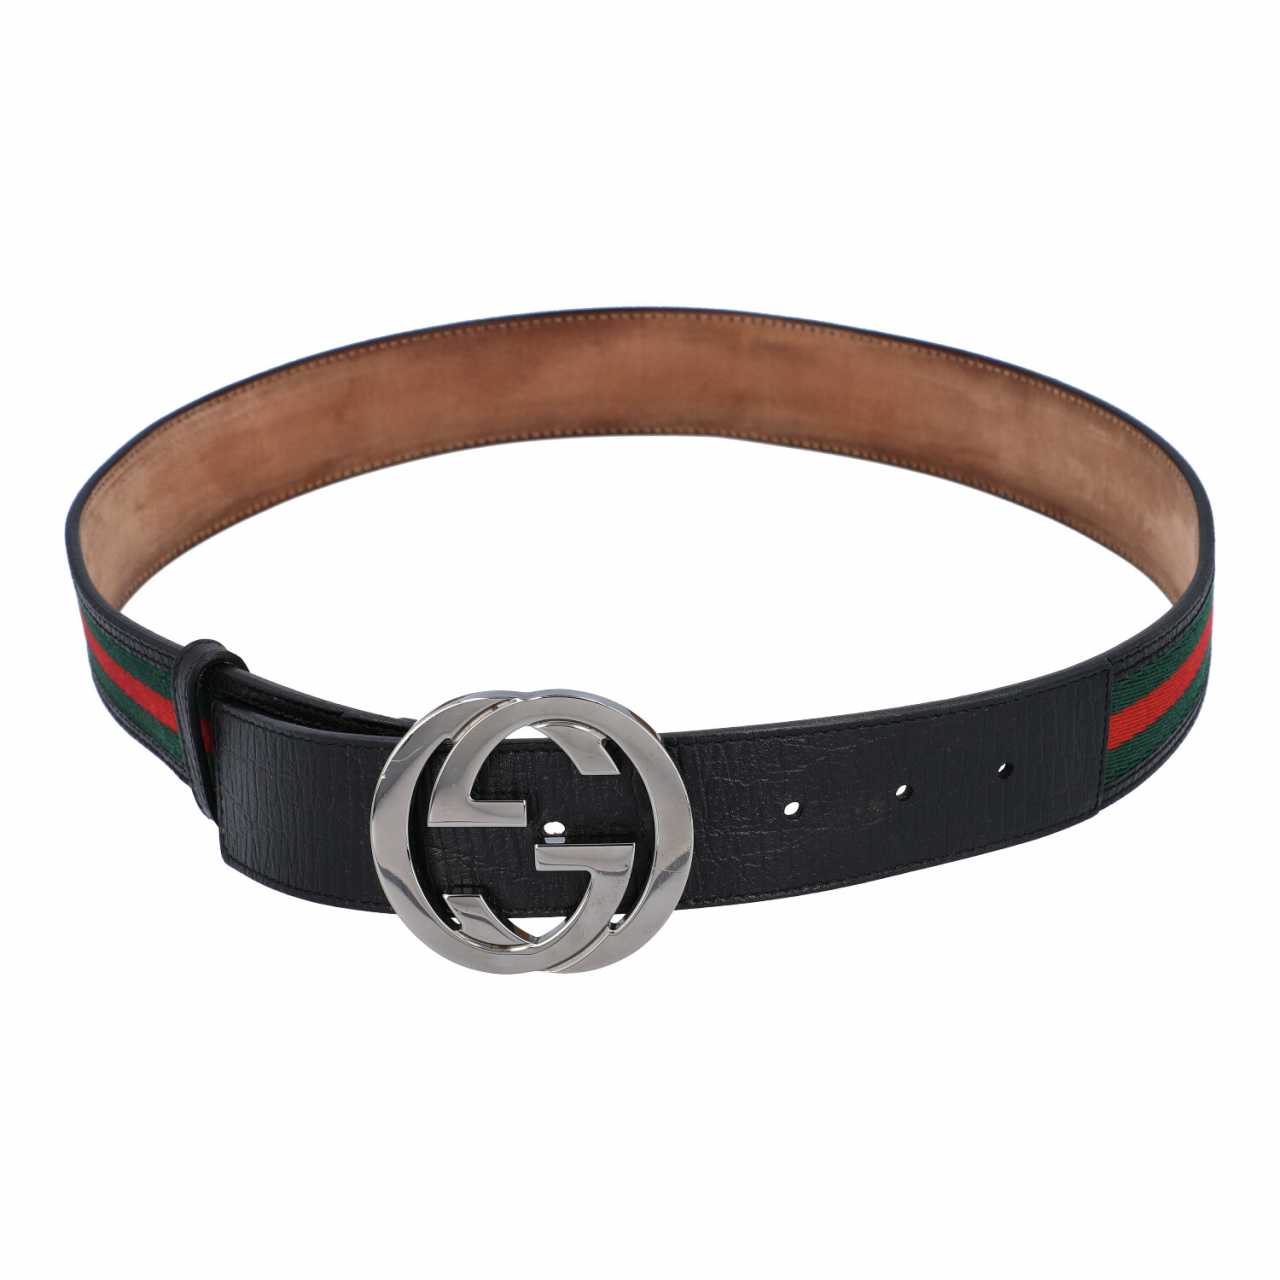 GUCCI belt, length 85cm. — buy at 